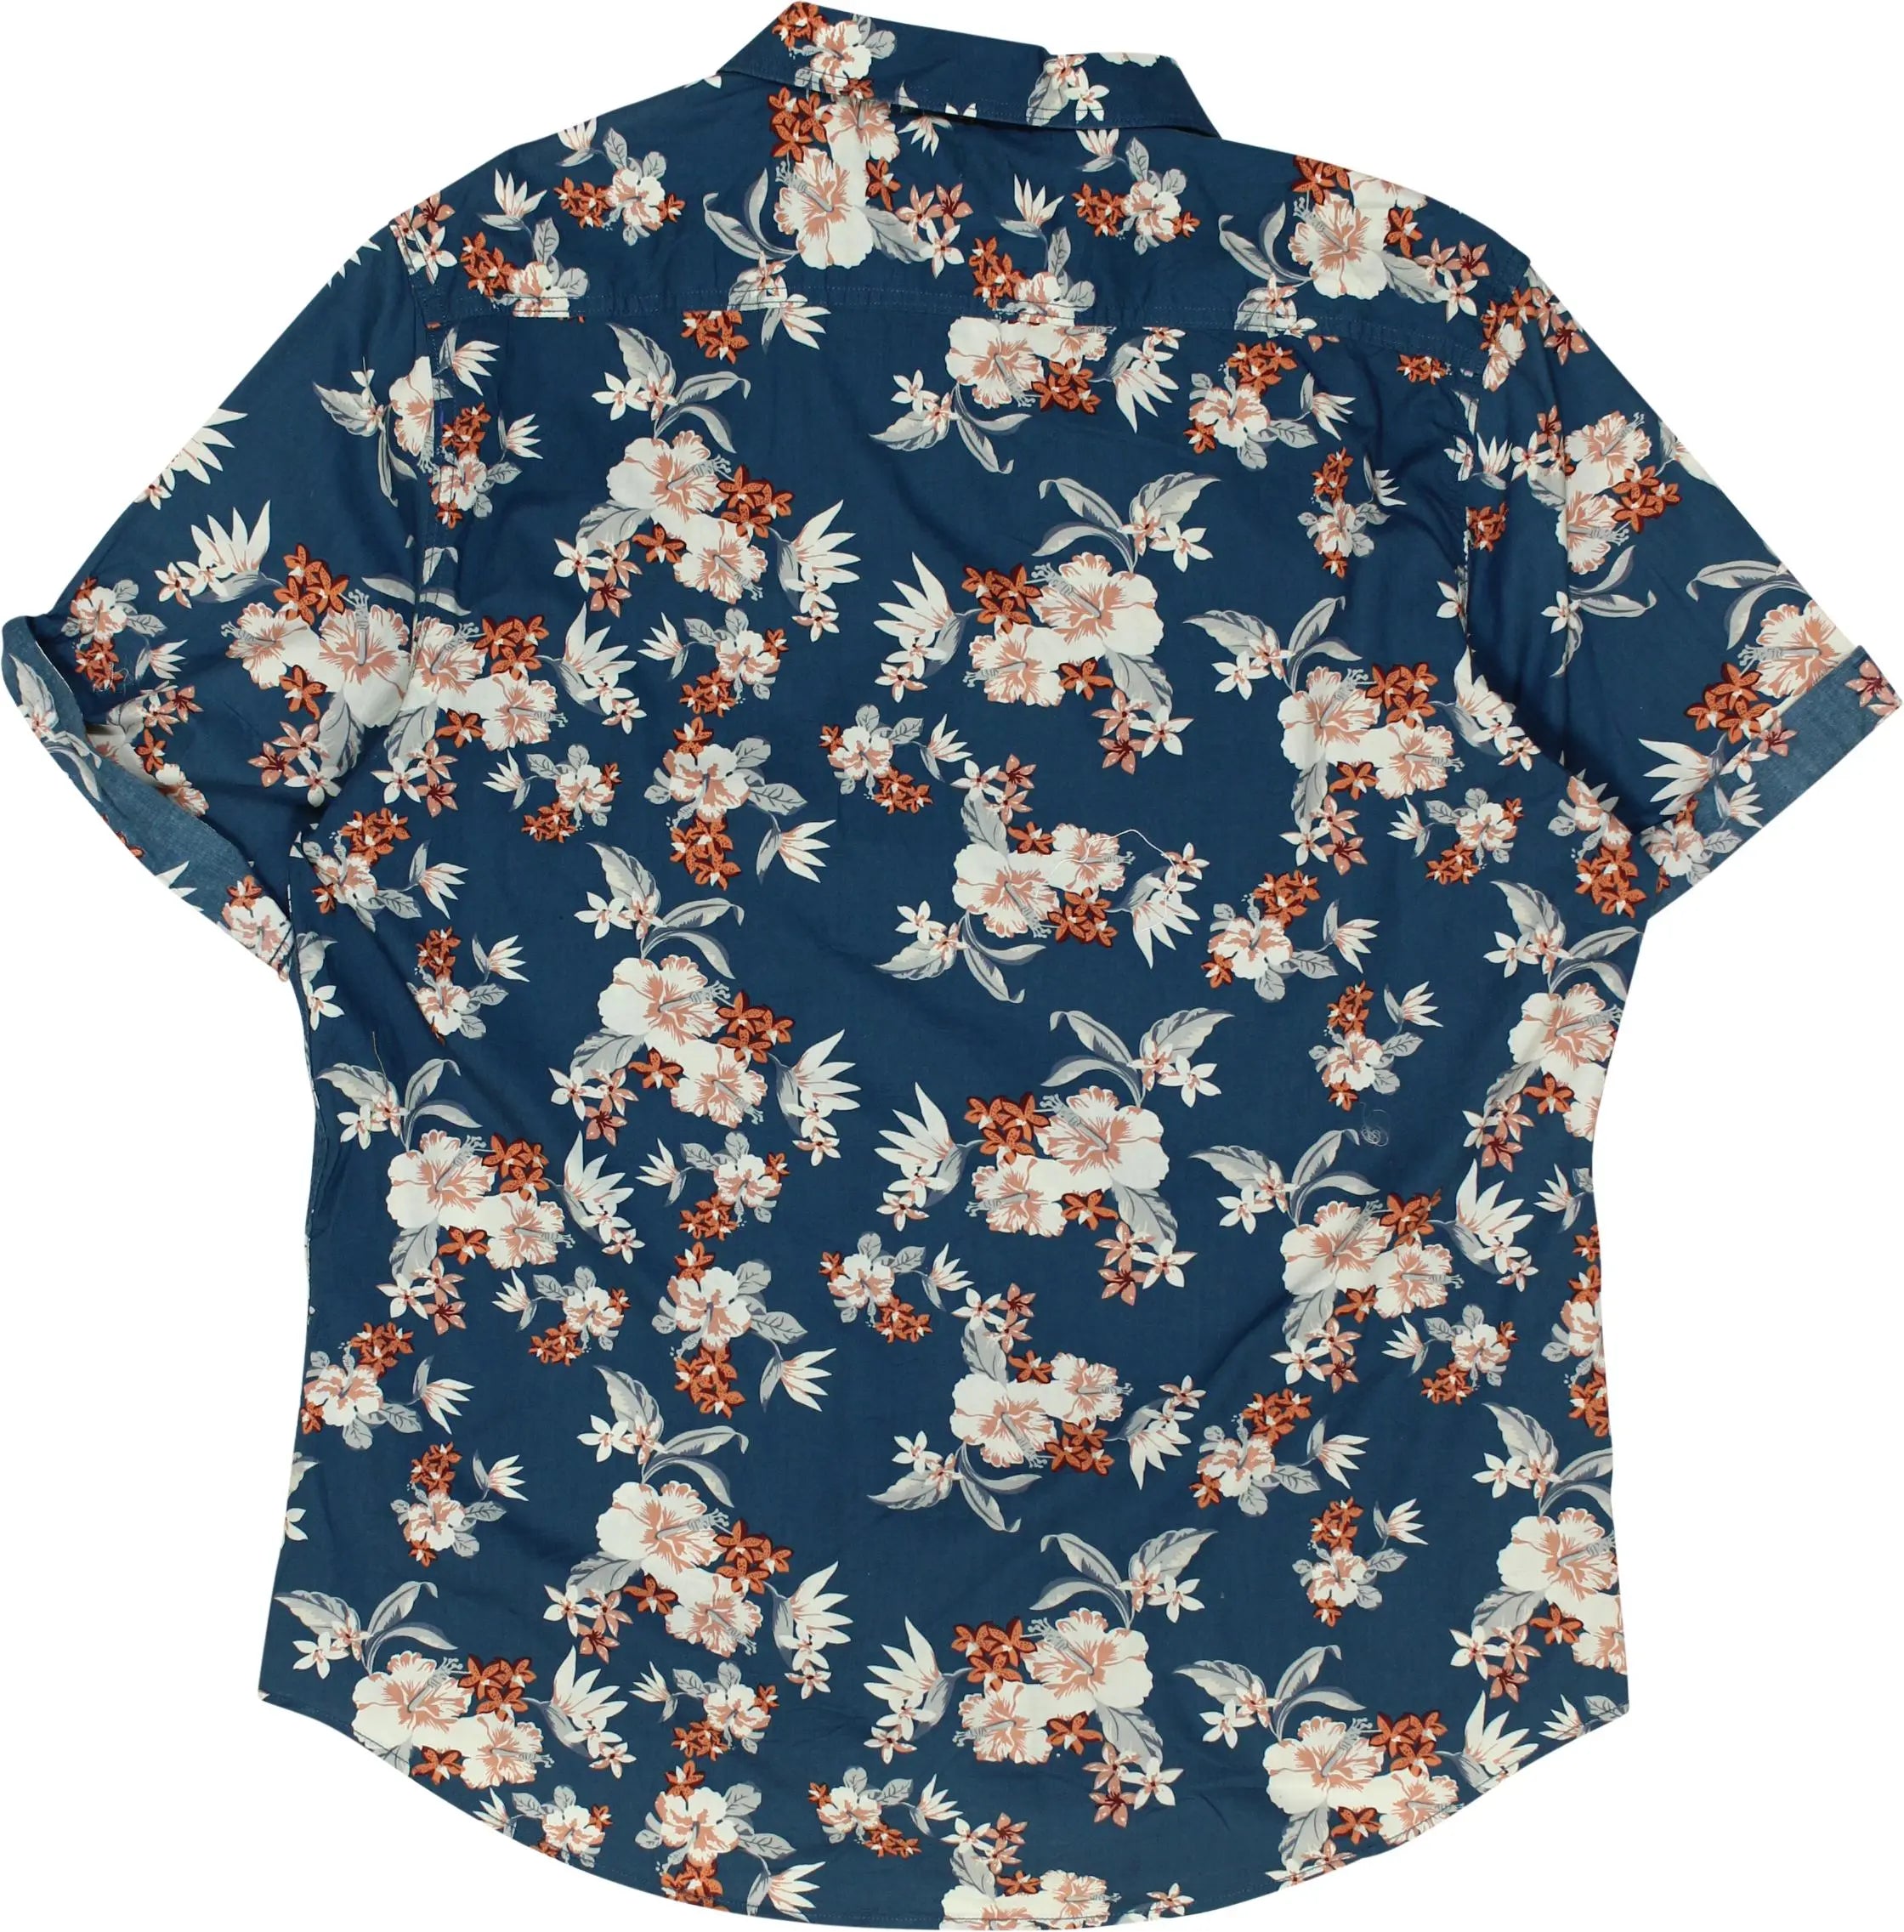 7diamonds - Hawaiian Shirt- ThriftTale.com - Vintage and second handclothing